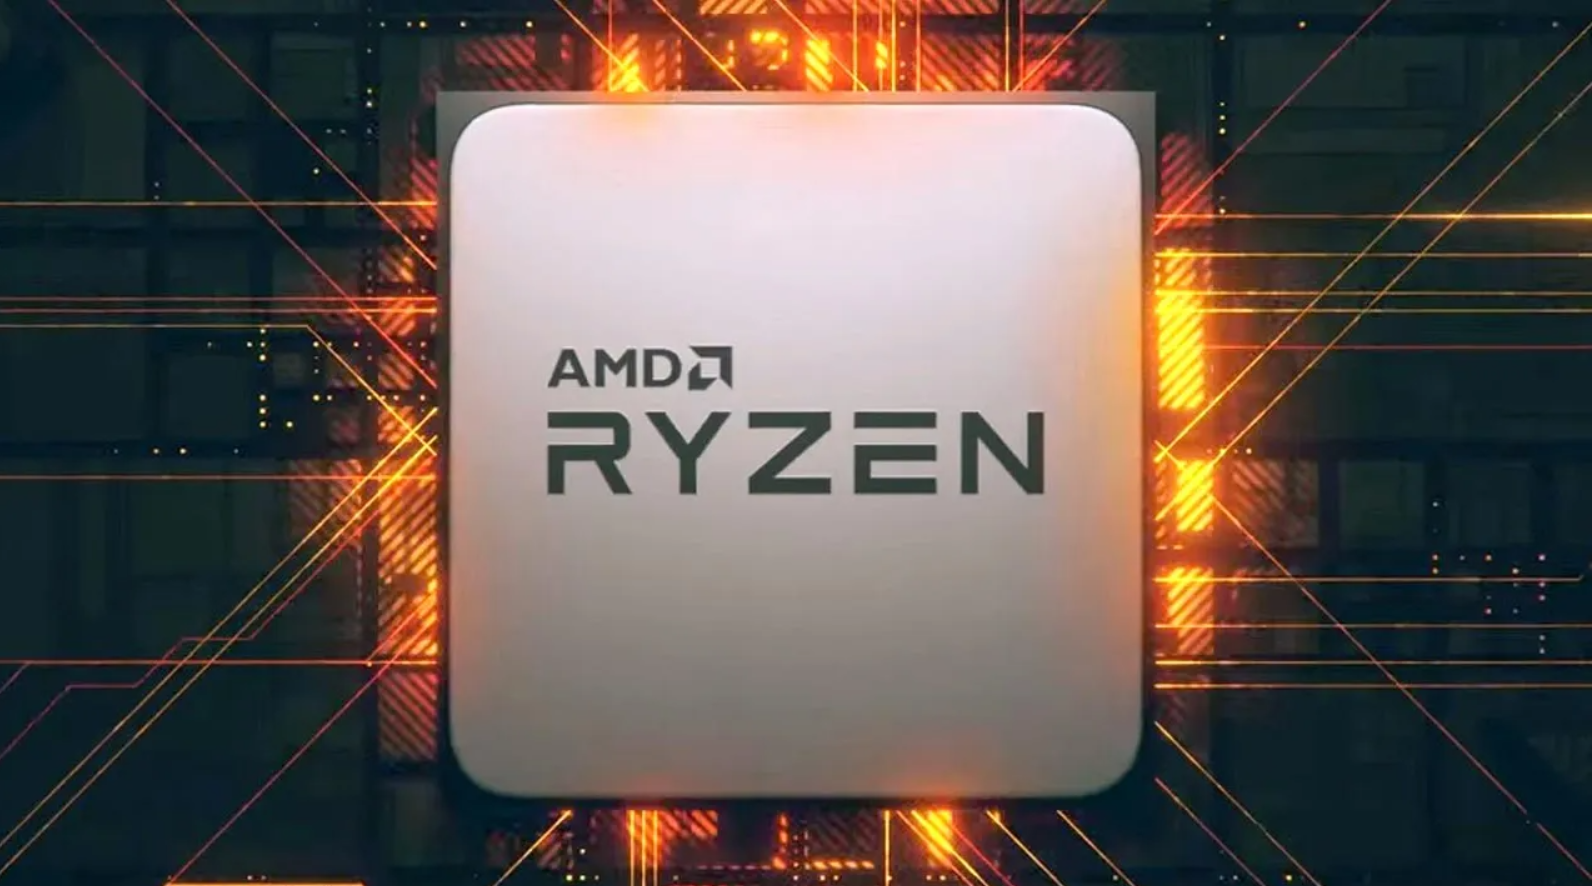 AMD تعلن عن معالجات Ryzen 5000 للحواسيب المحمولة